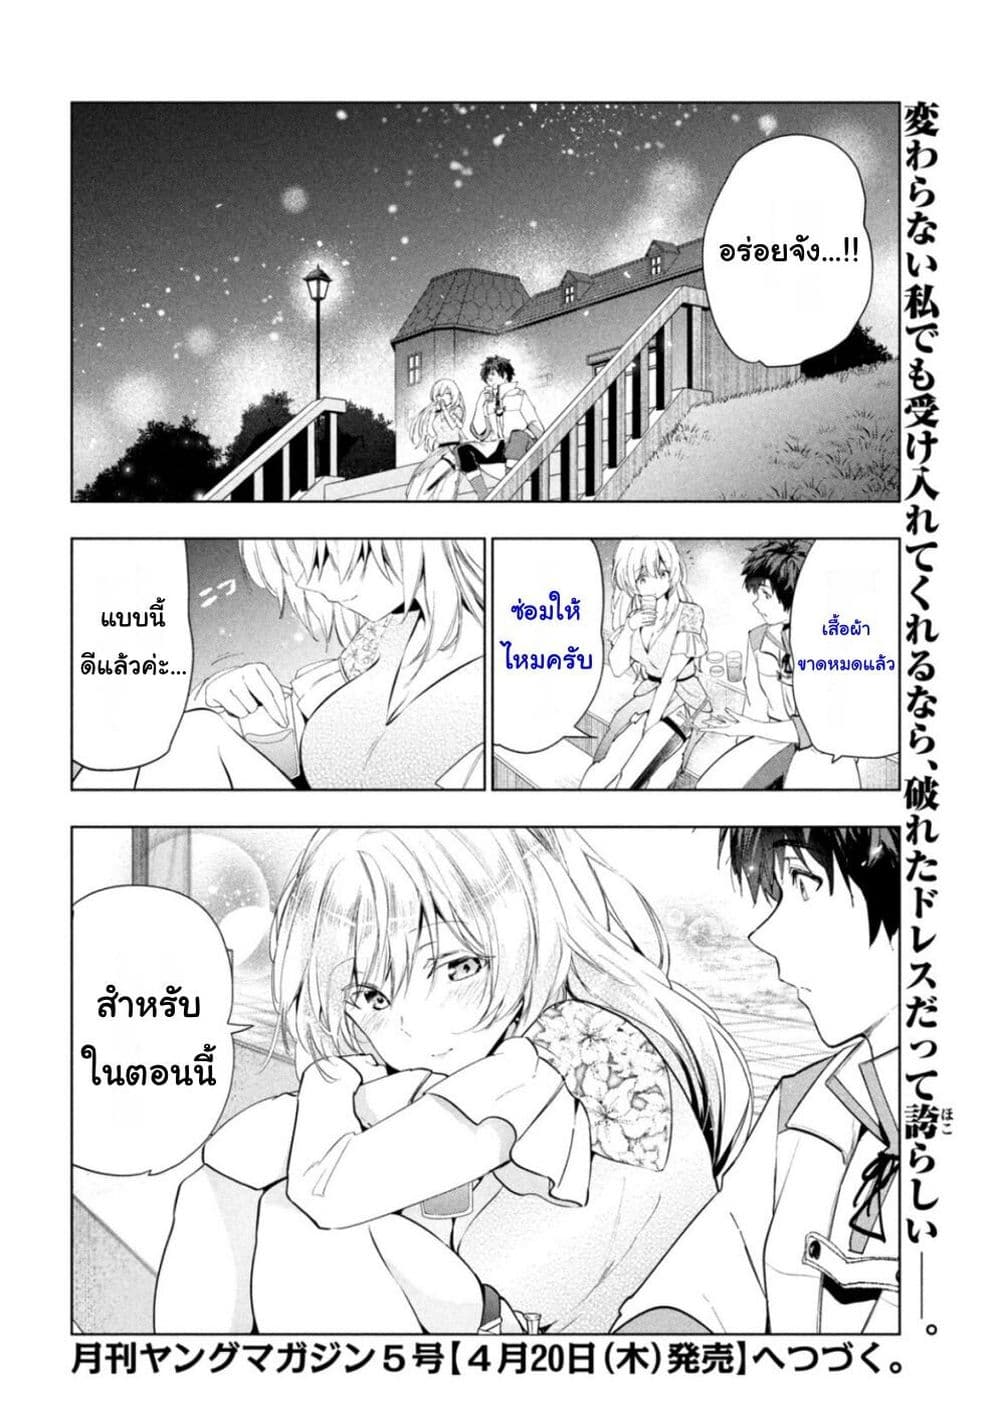 Kaiko sareta Ankoku Heishi (30-dai) no Slow na Second Life 41 - EYE-Manga   อายมังงะ รวมโดจิน มังงะ ติดเรท